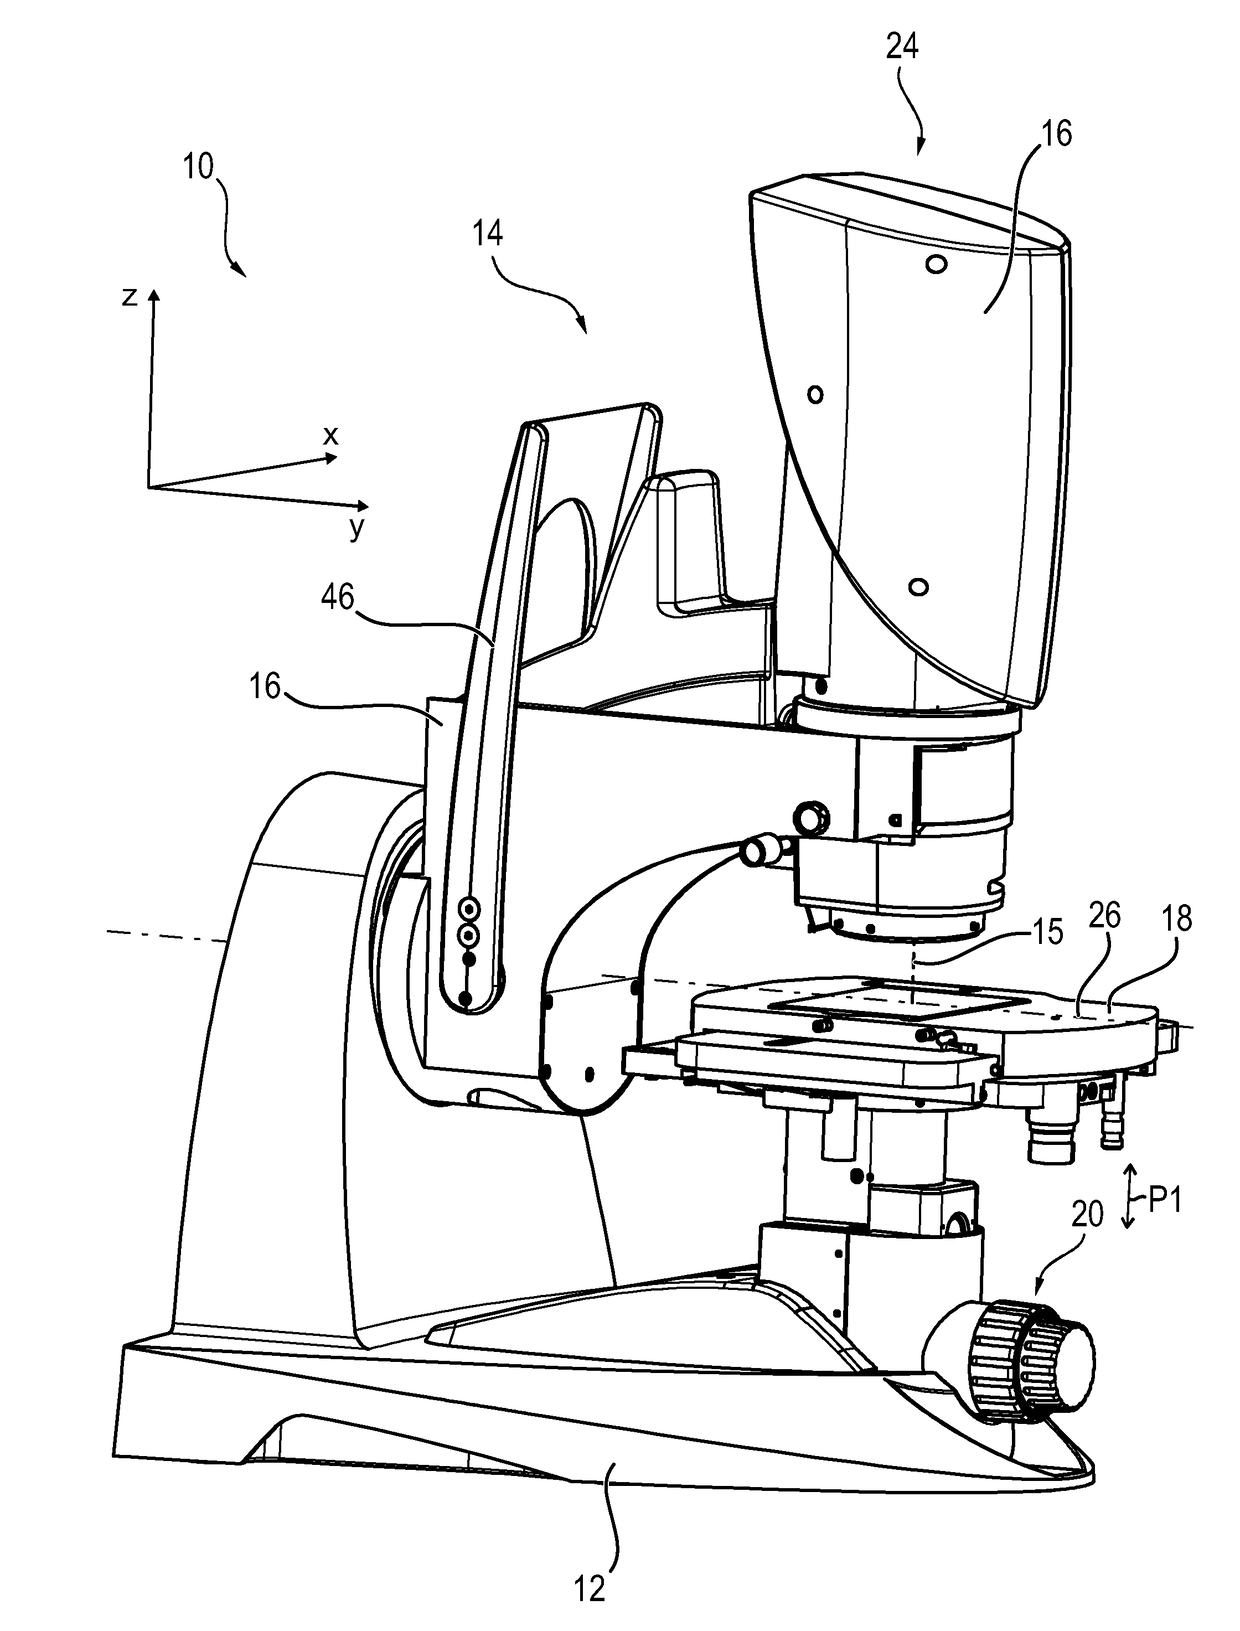 Eucentric digital microscope having a pivotally mounted pivot unit